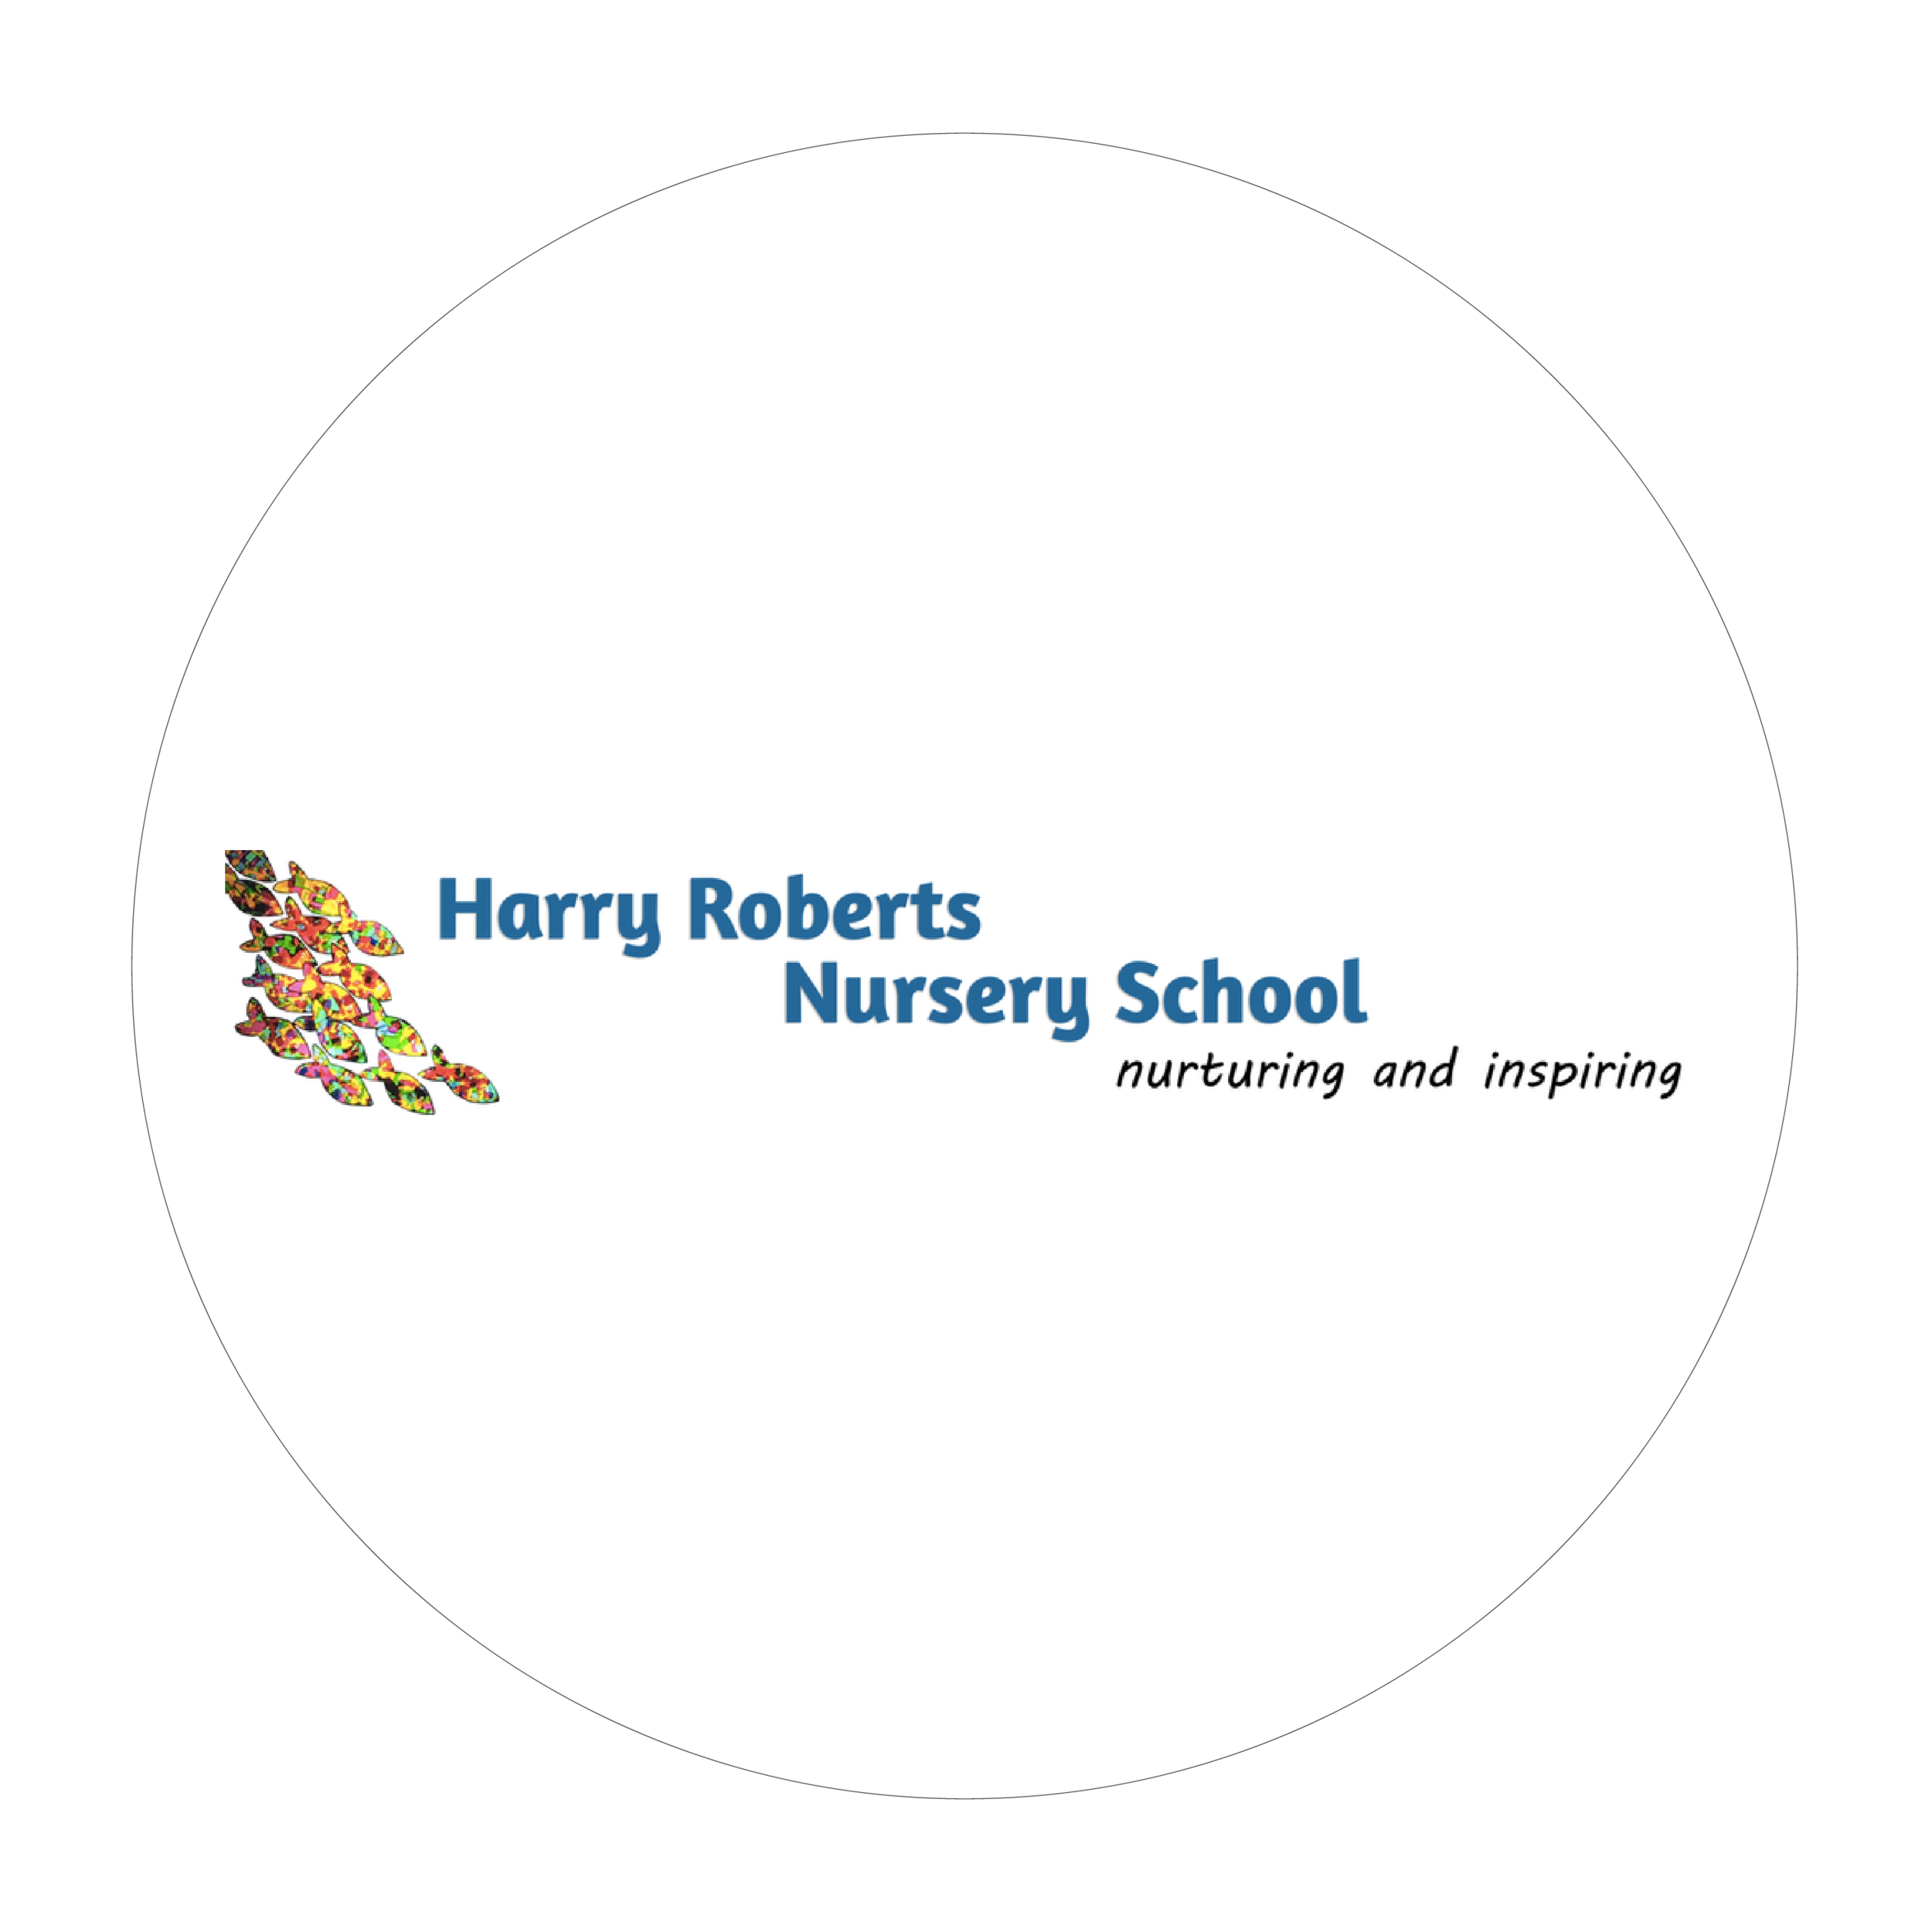 Harry Roberts Nursery School